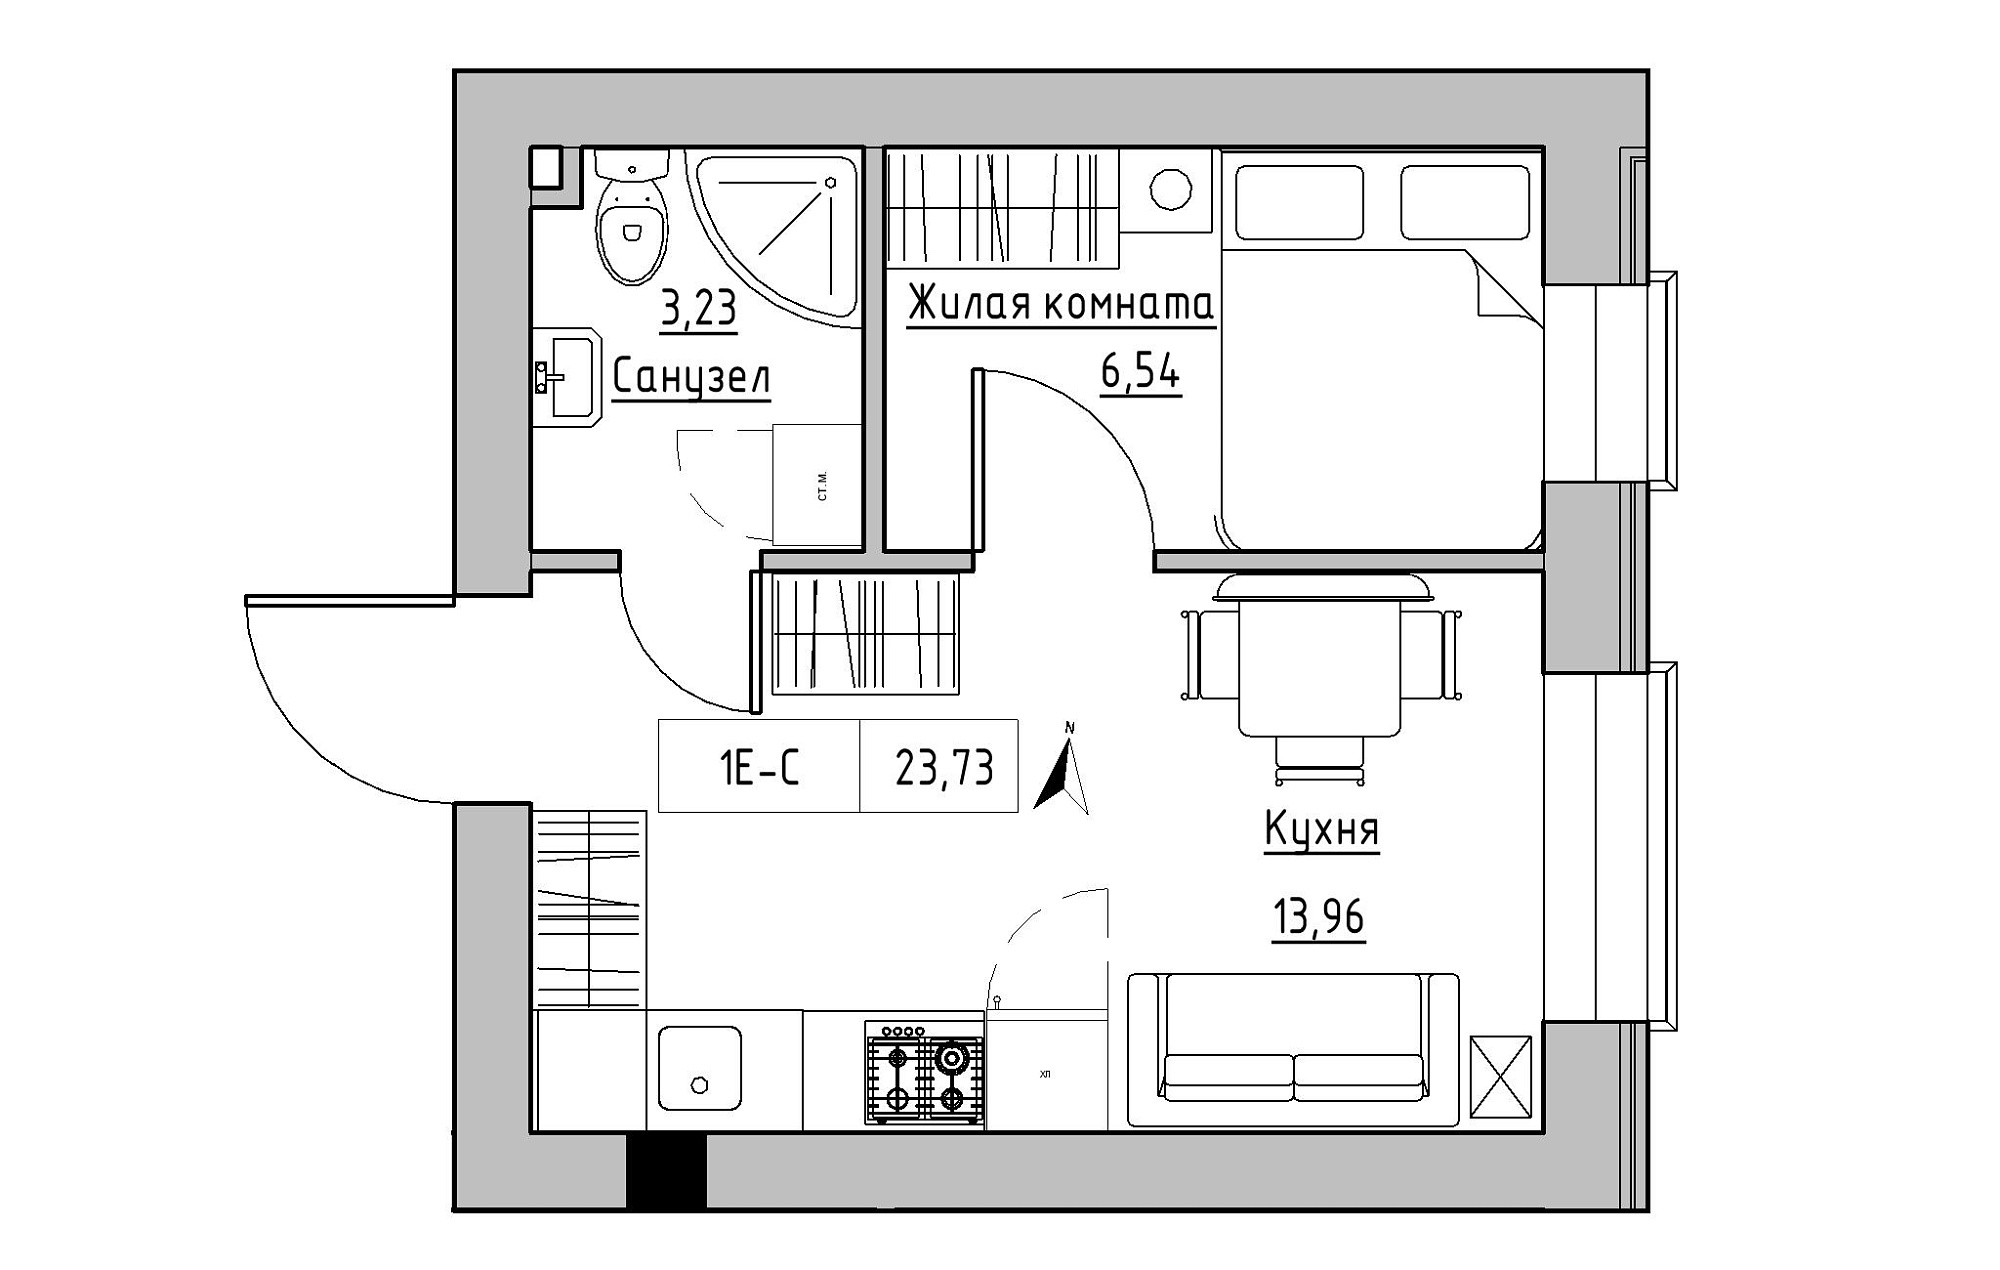 Planning 1-rm flats area 23.73m2, KS-019-01/0007.